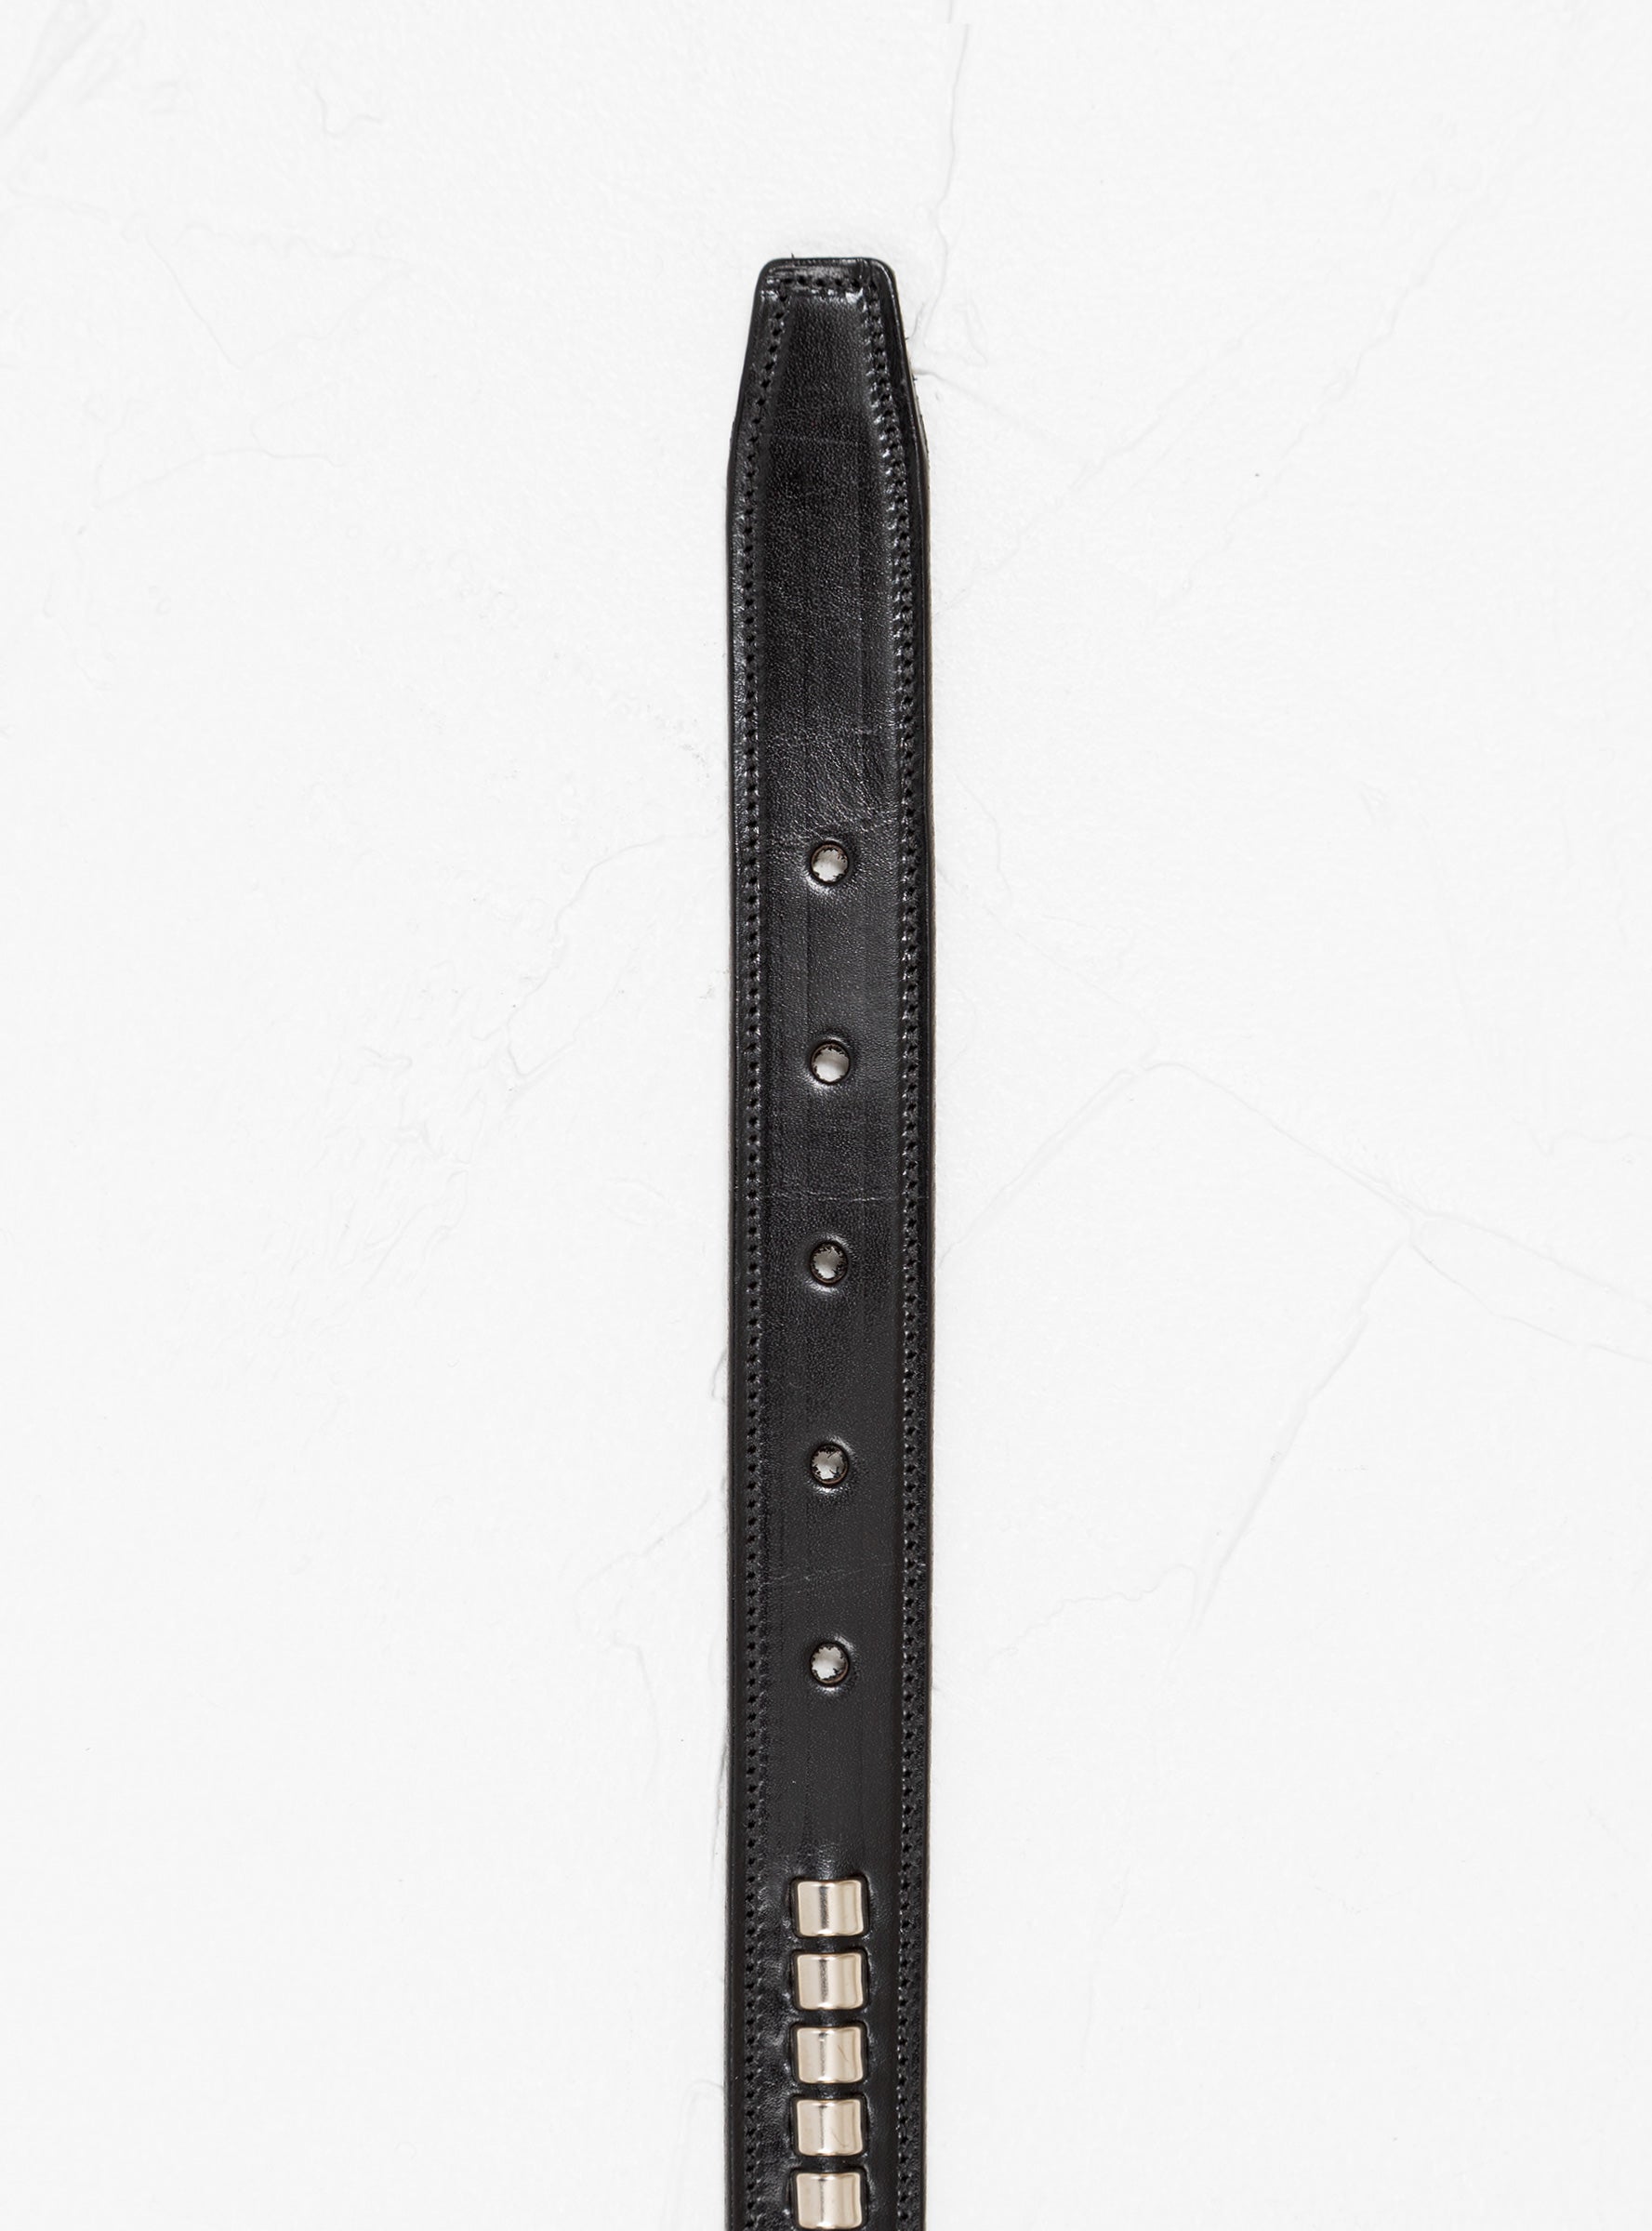  Tory Leather Clincher Belt Black & Silver - 38"